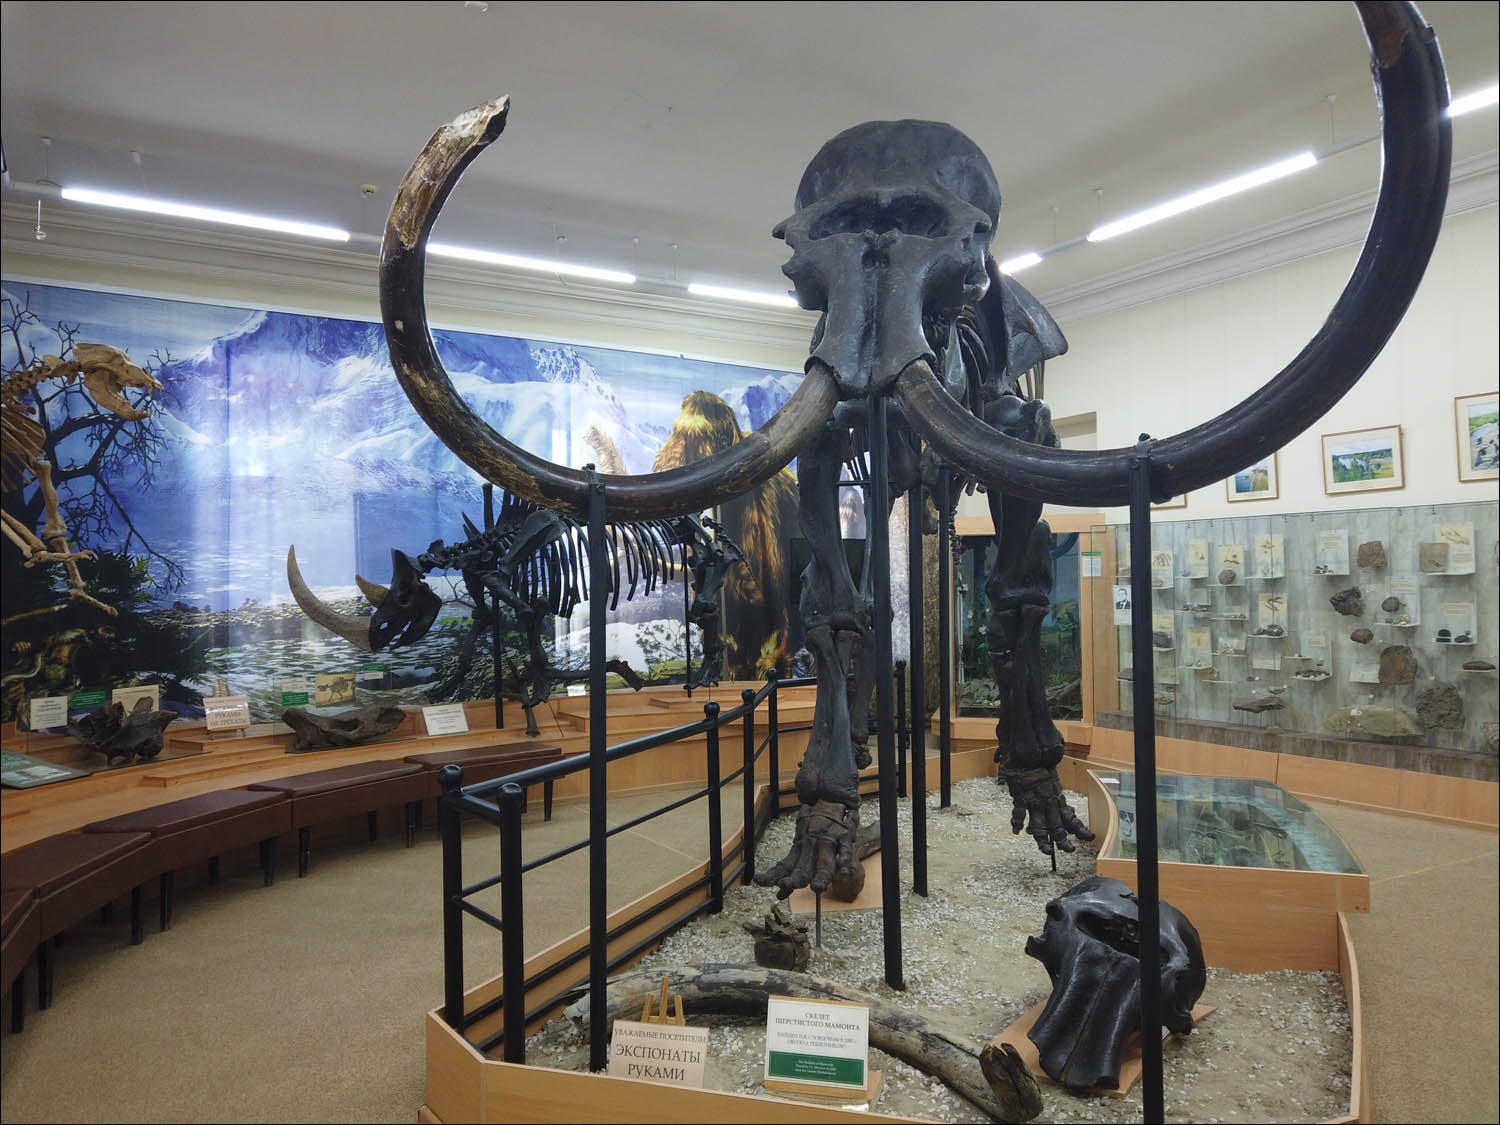 Ivanovich Mammoth displayed as taxidermy specimen.